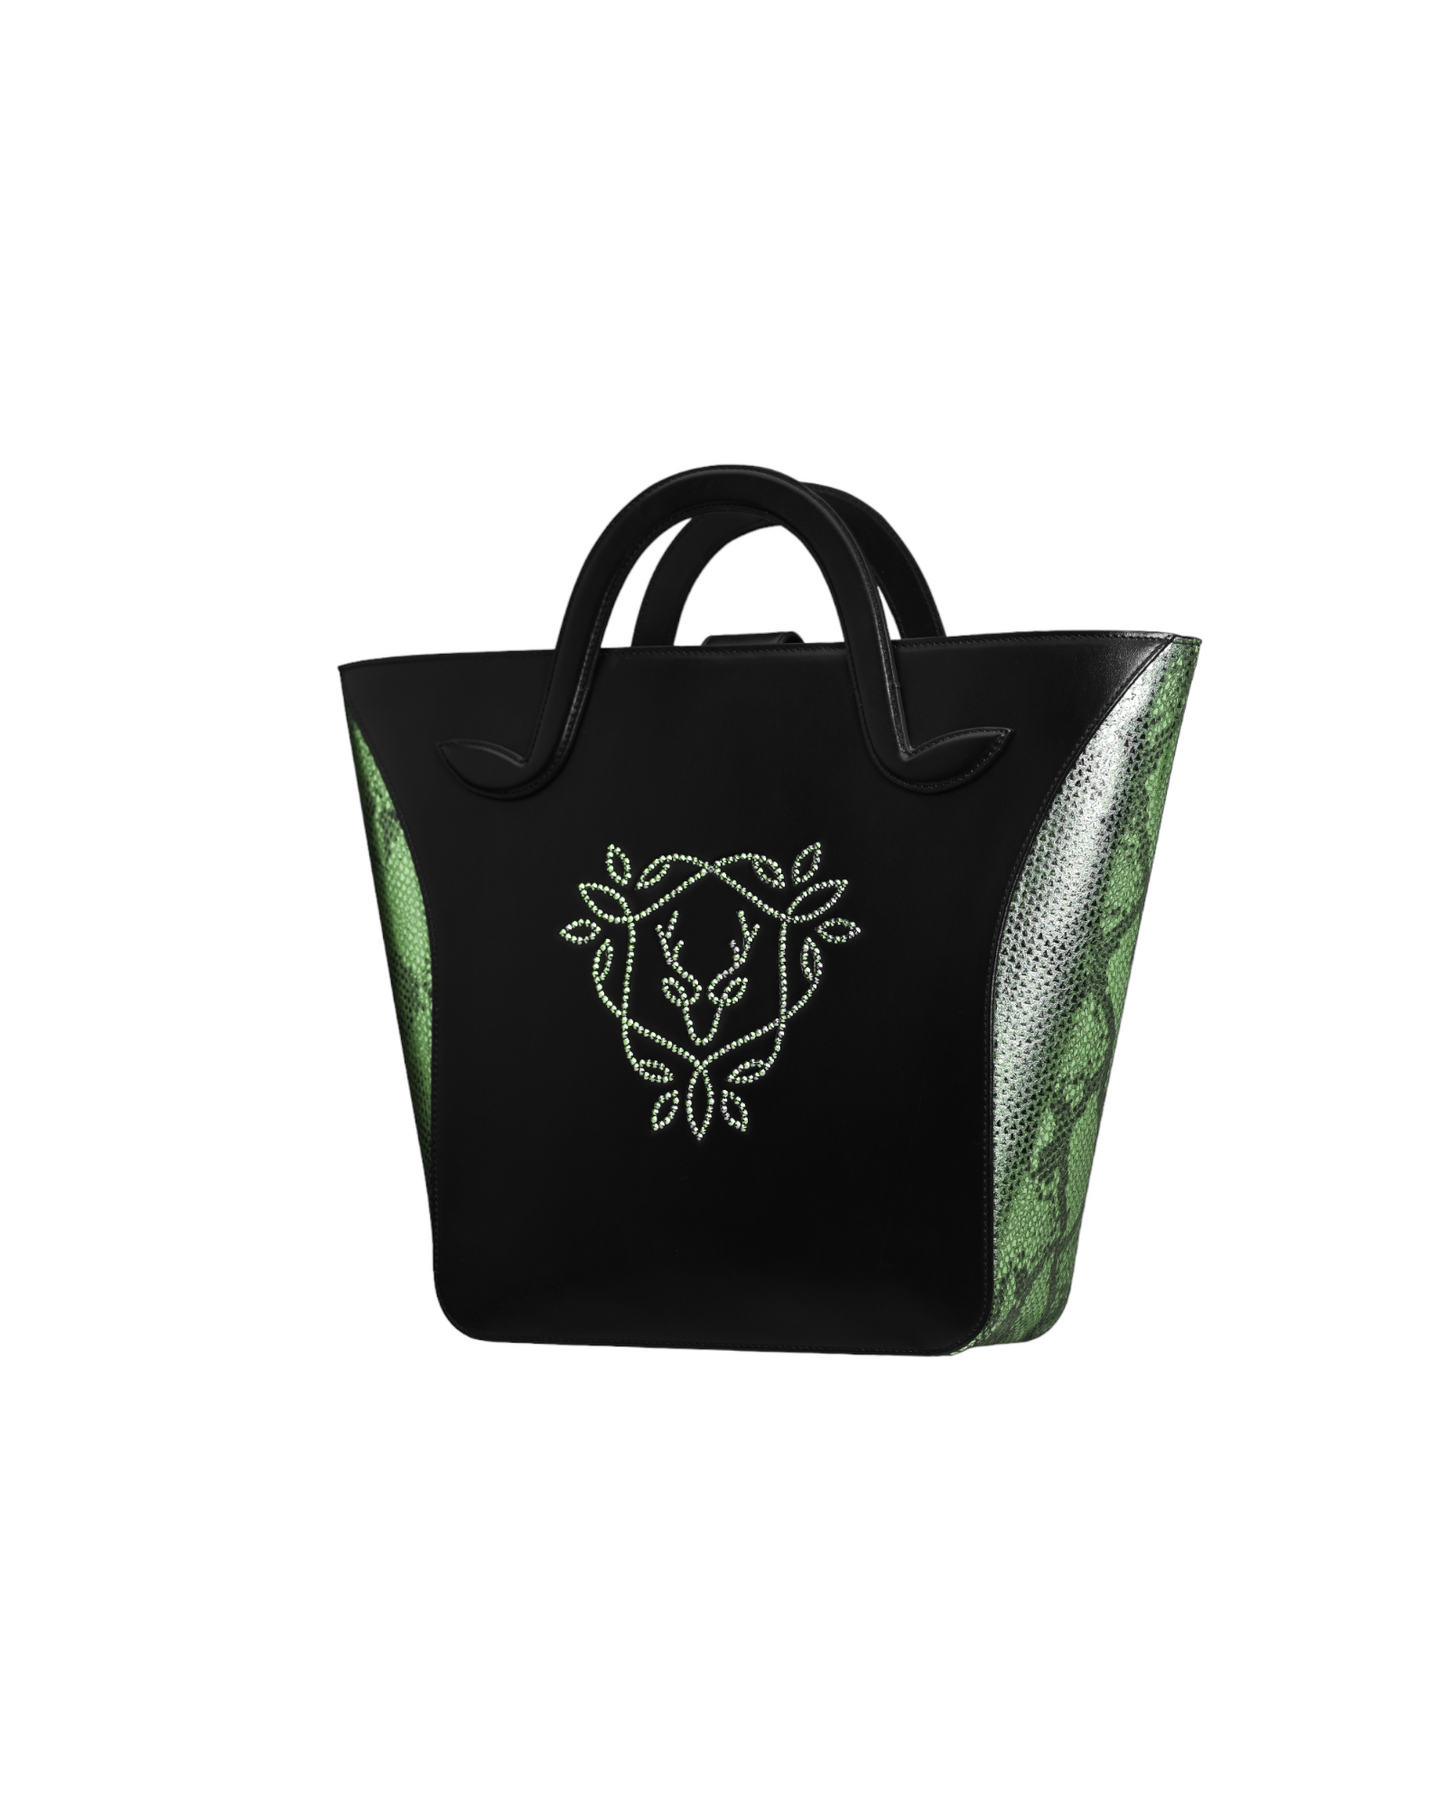 Rania Manasra Black/Green Pukka Tote Bag